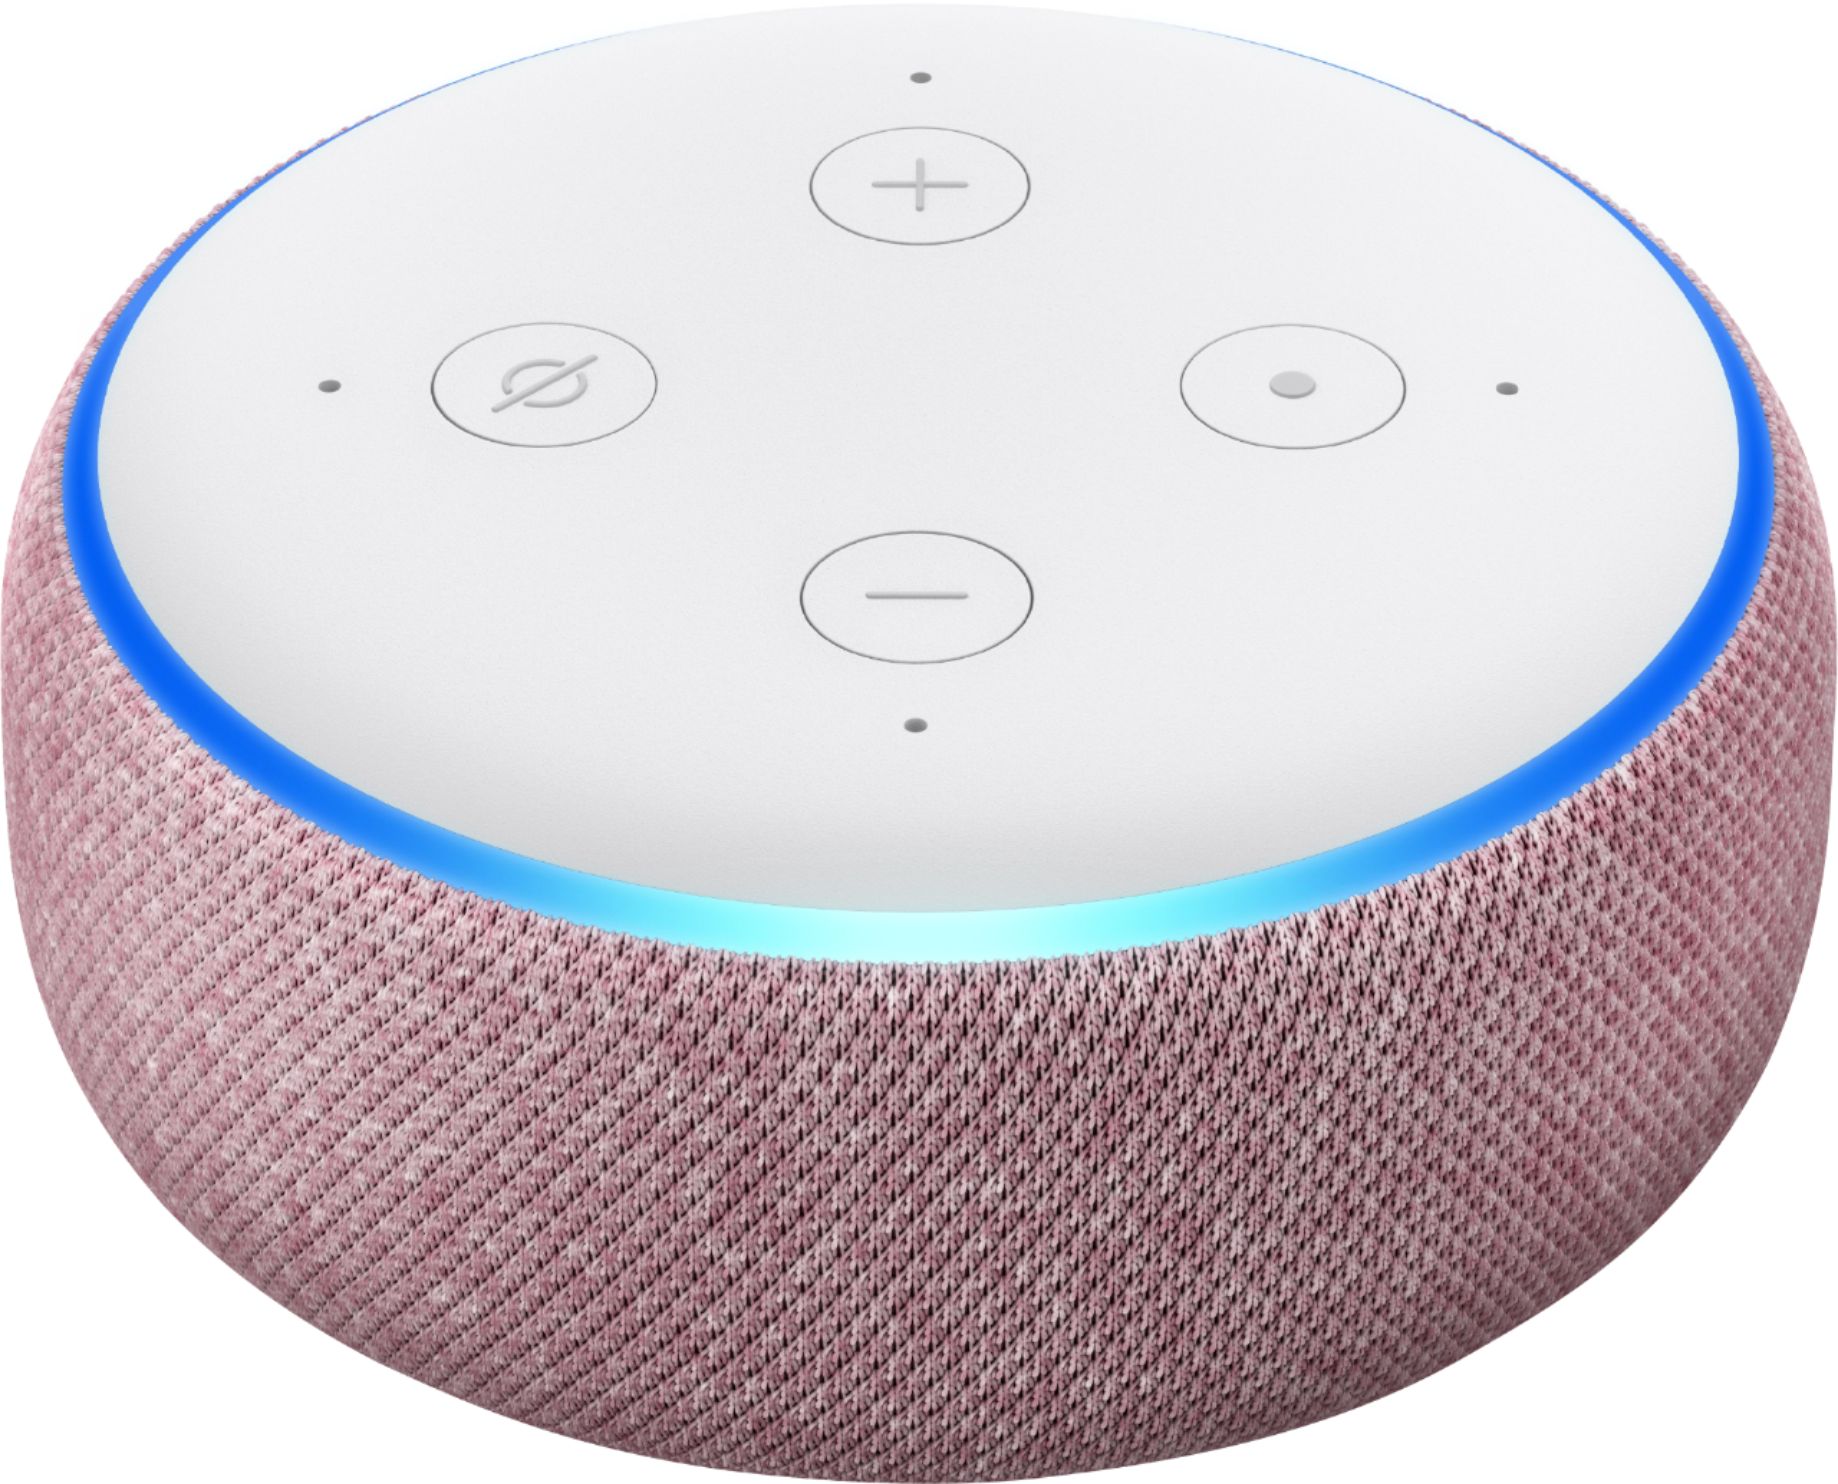 Amazon Echo Dot Smart Speaker Plum 3rd Generation 